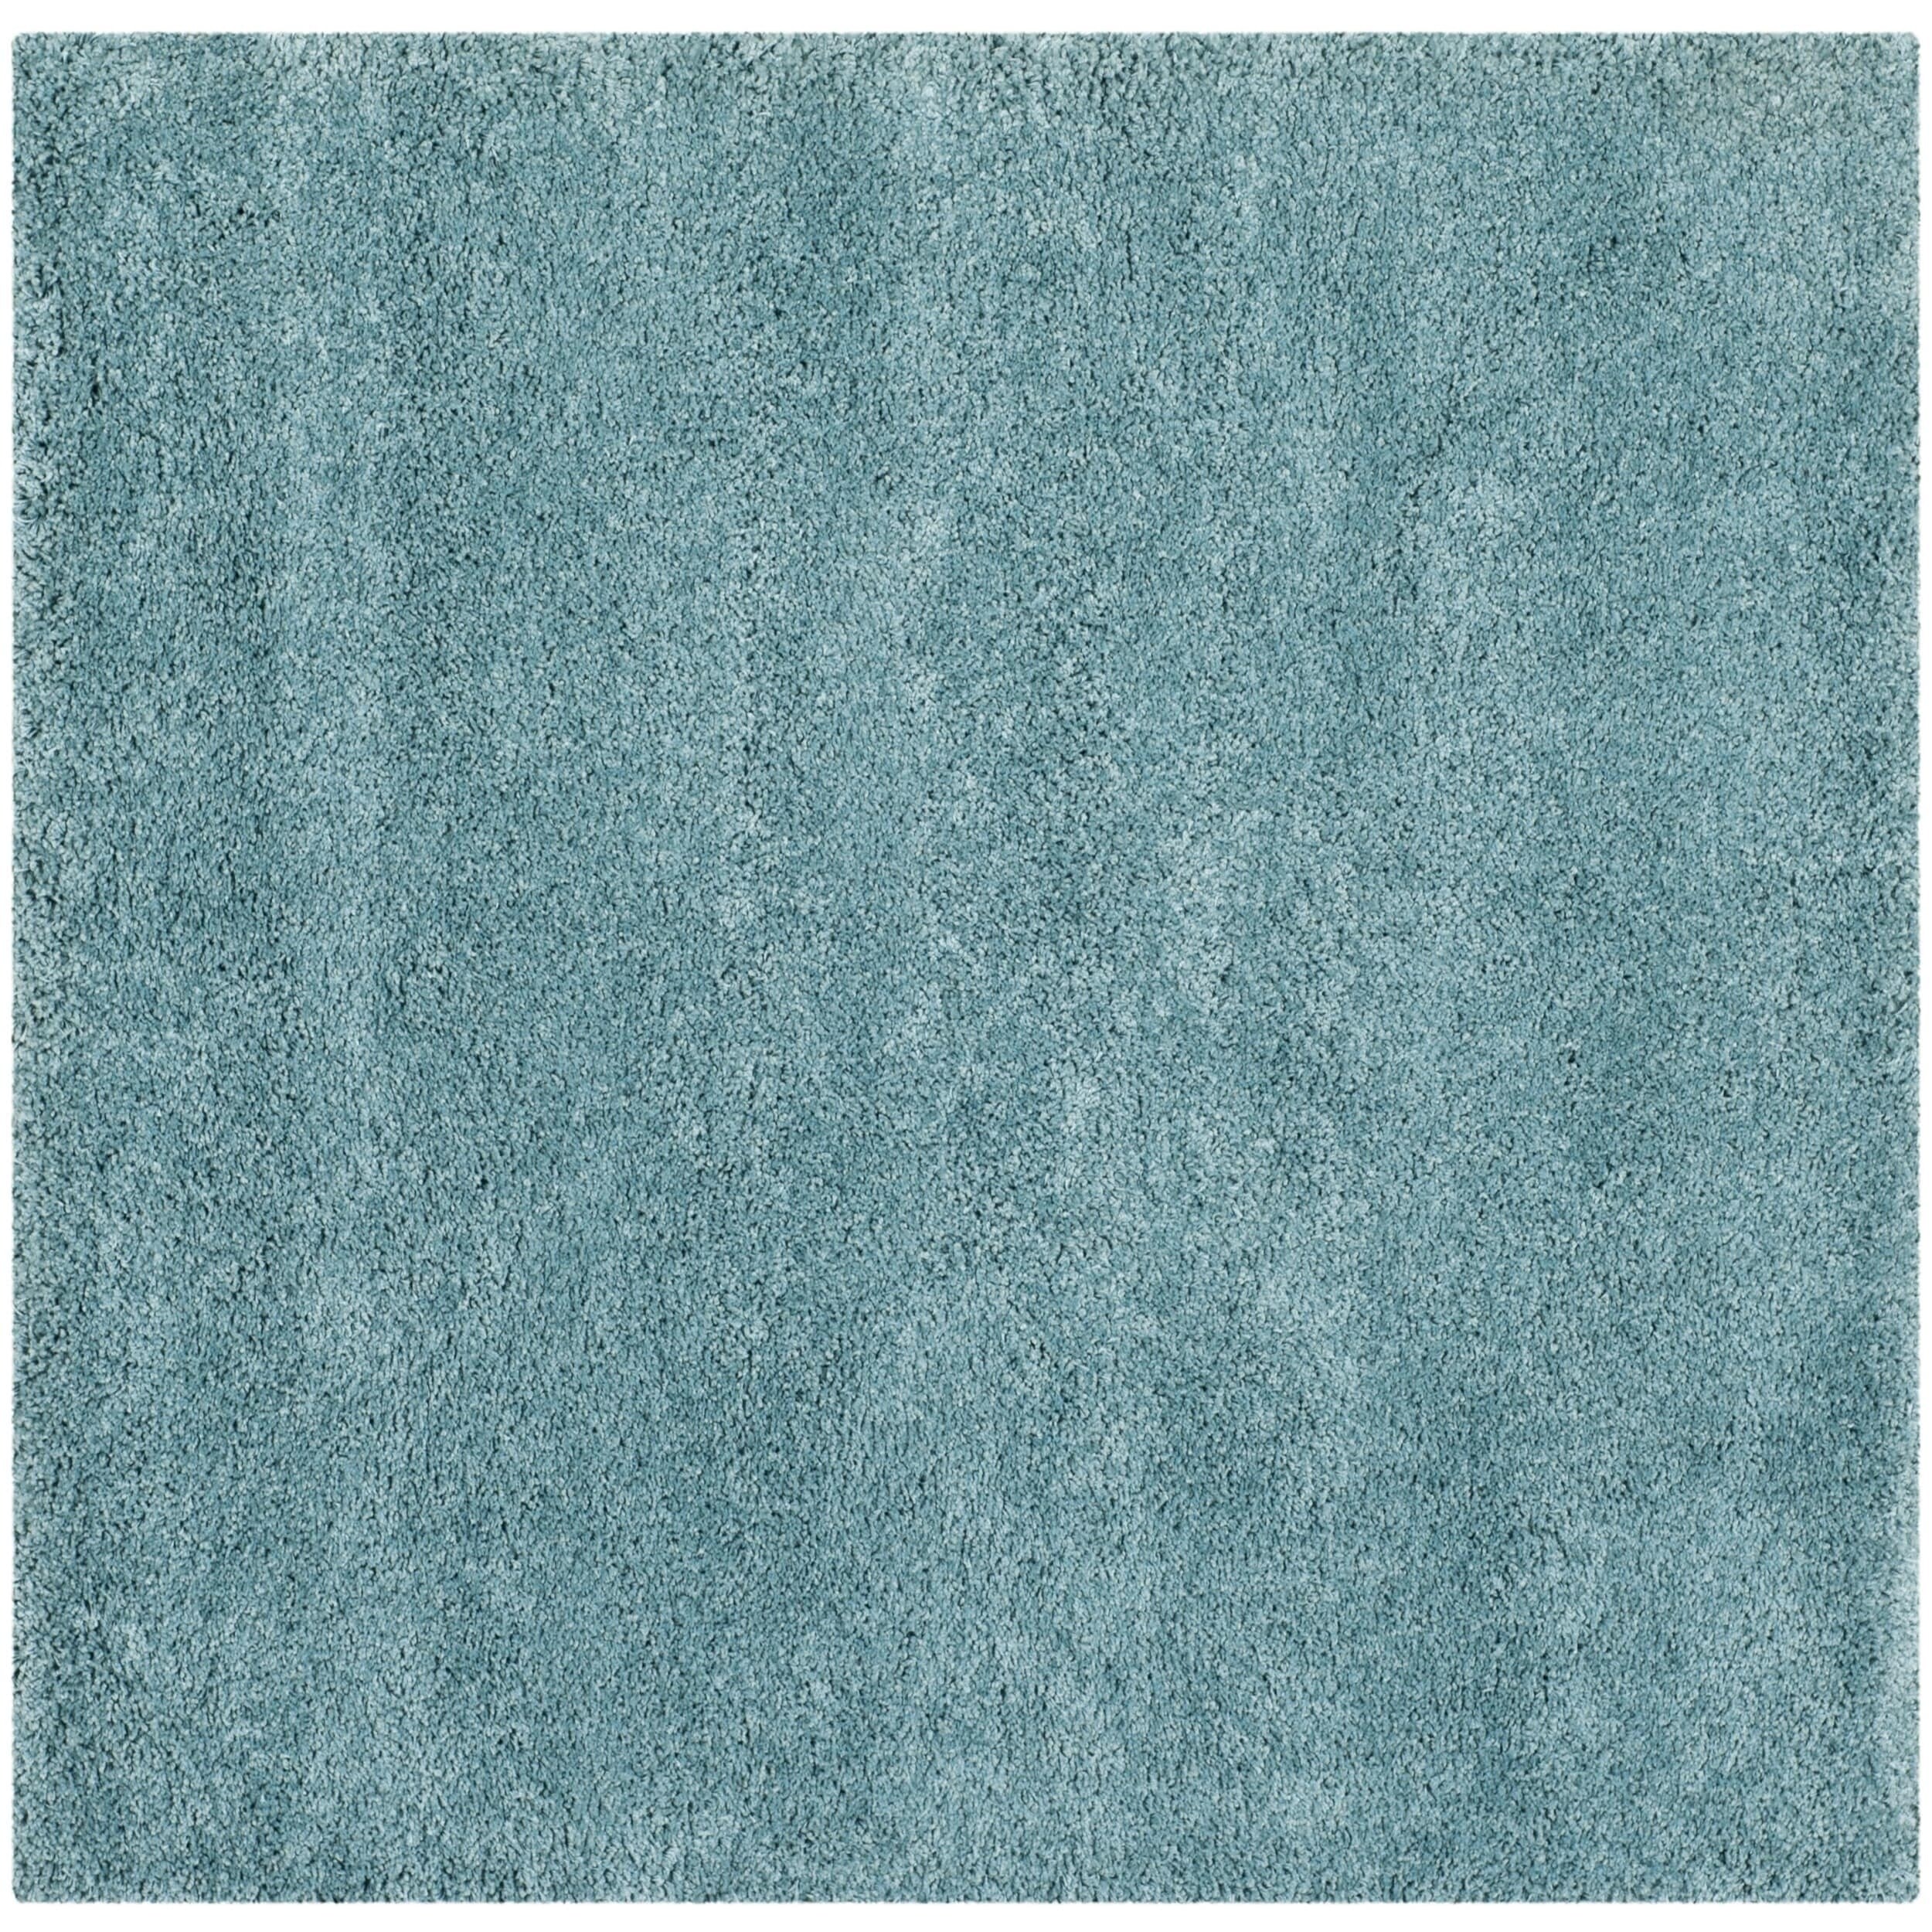 Soft Milan Shag Collection Aqua Blue Area Rug Decor for Home & Office 3' x 5' 